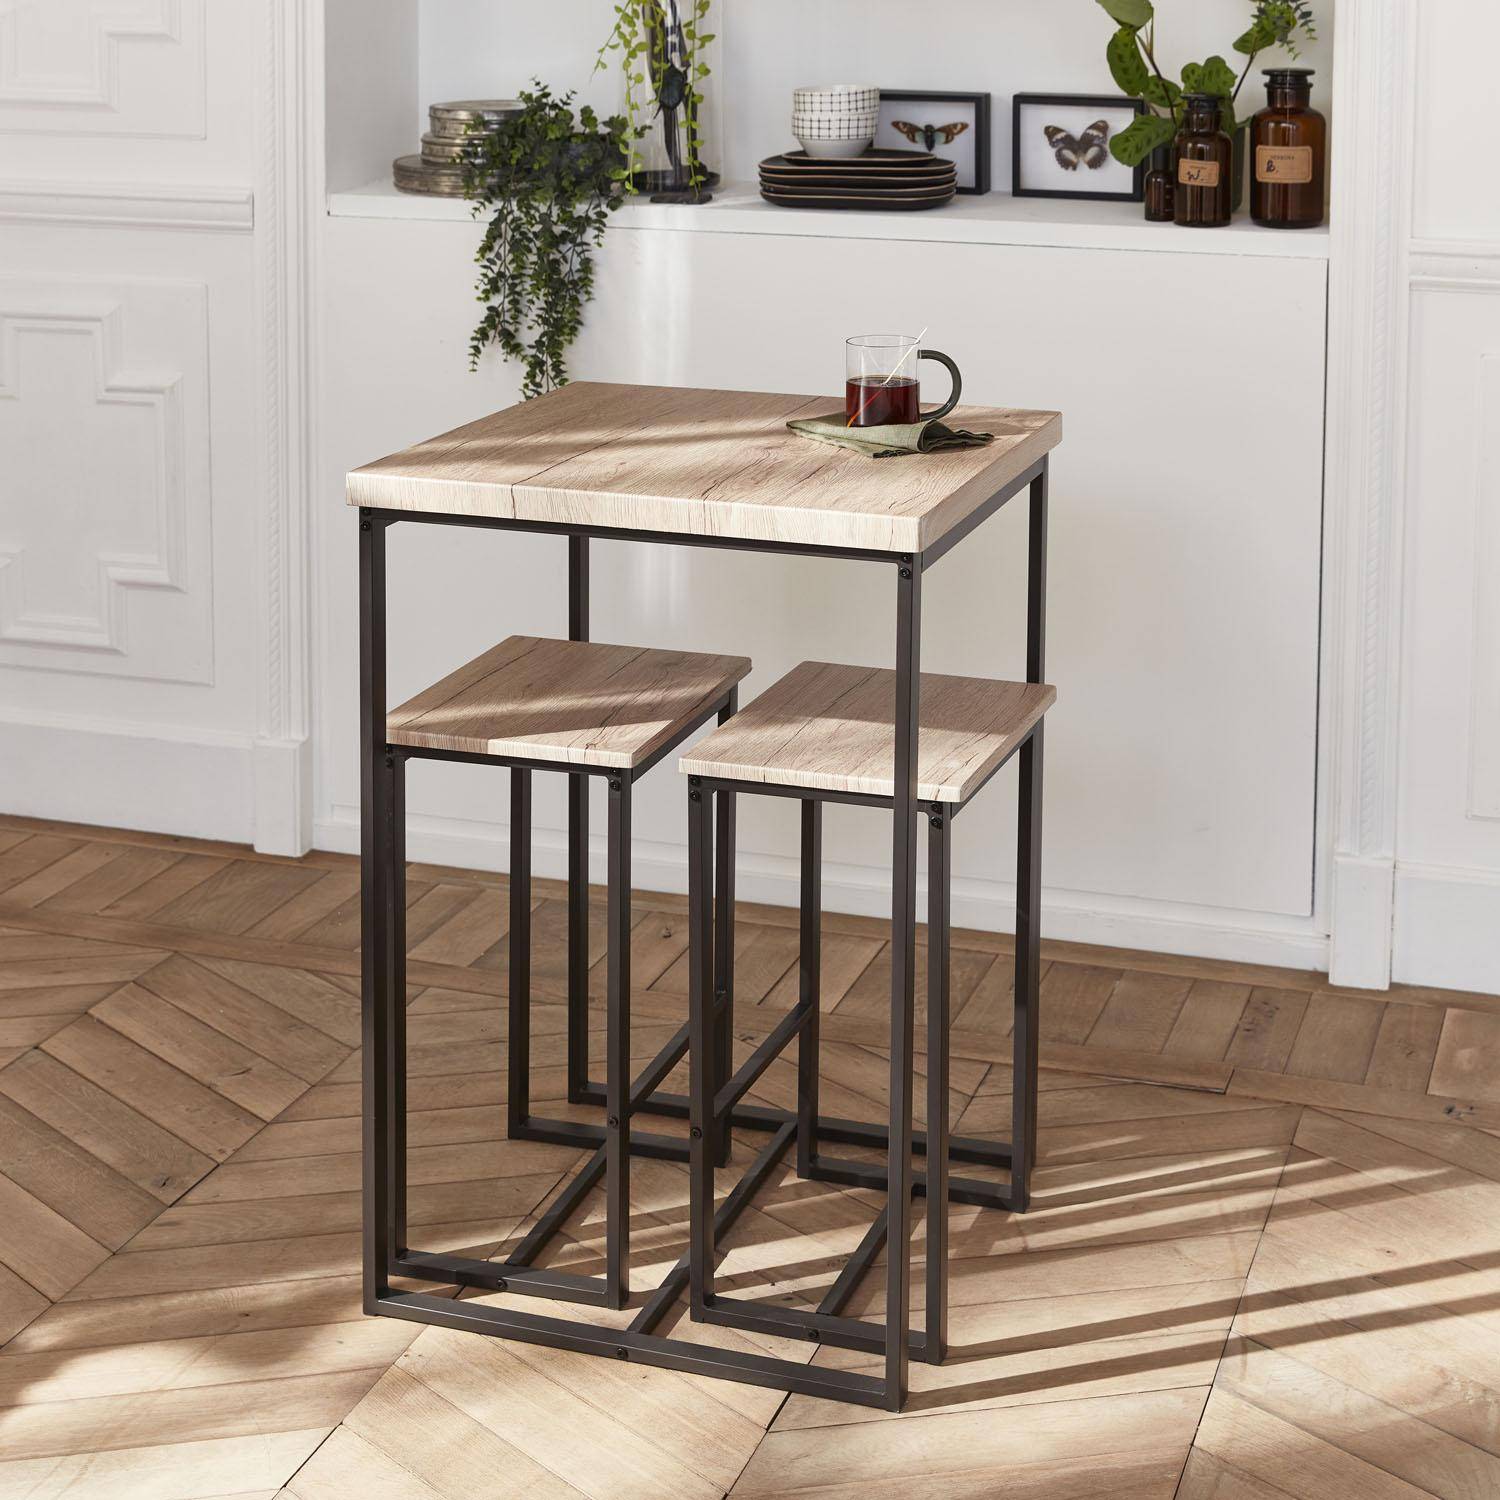 Industrial bar style table set with 2 stools, 60x60x88cm - Loft - Black,sweeek,Photo2